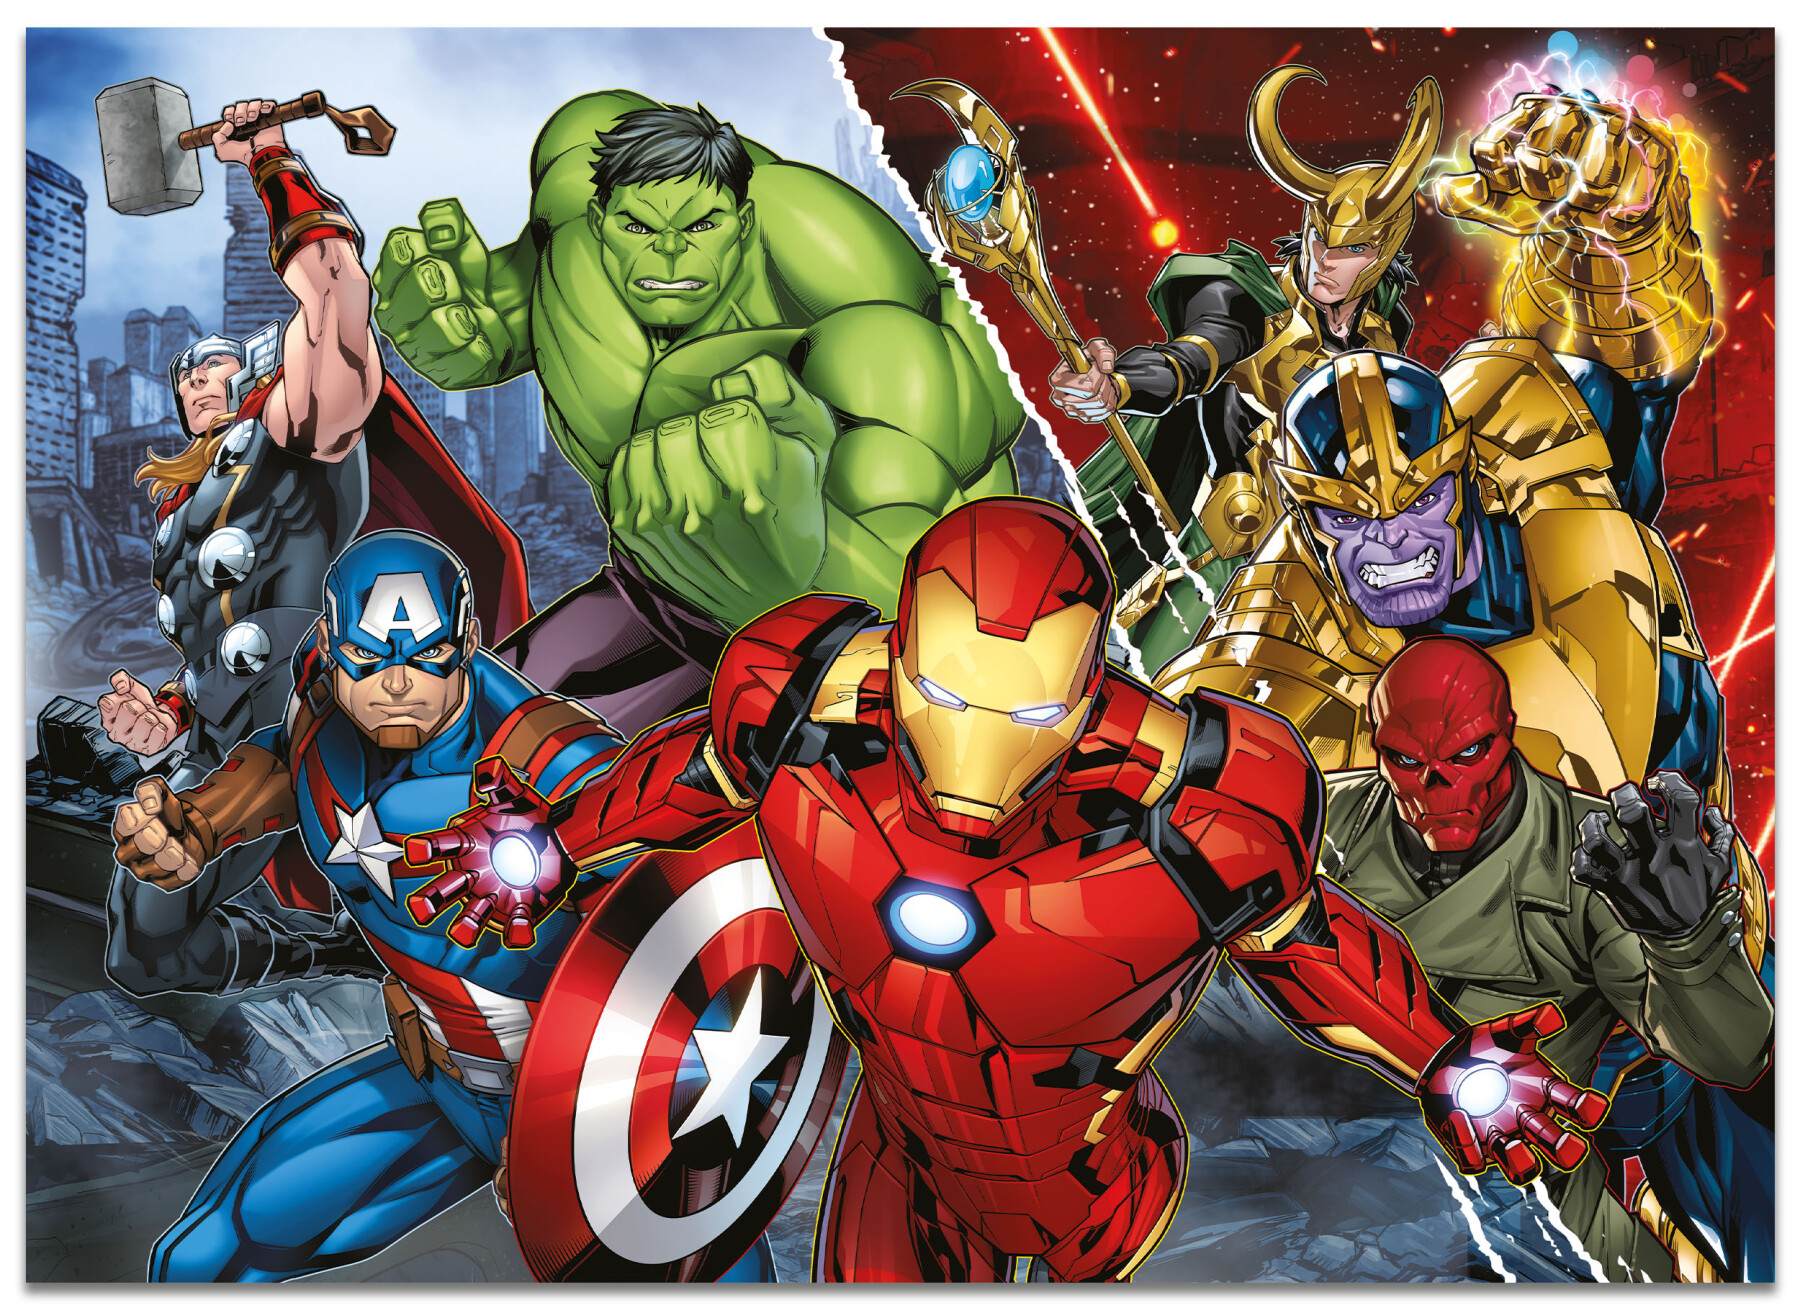 Marvel puzzle df  maxi floor 108 avengers - LISCIANI, Avengers